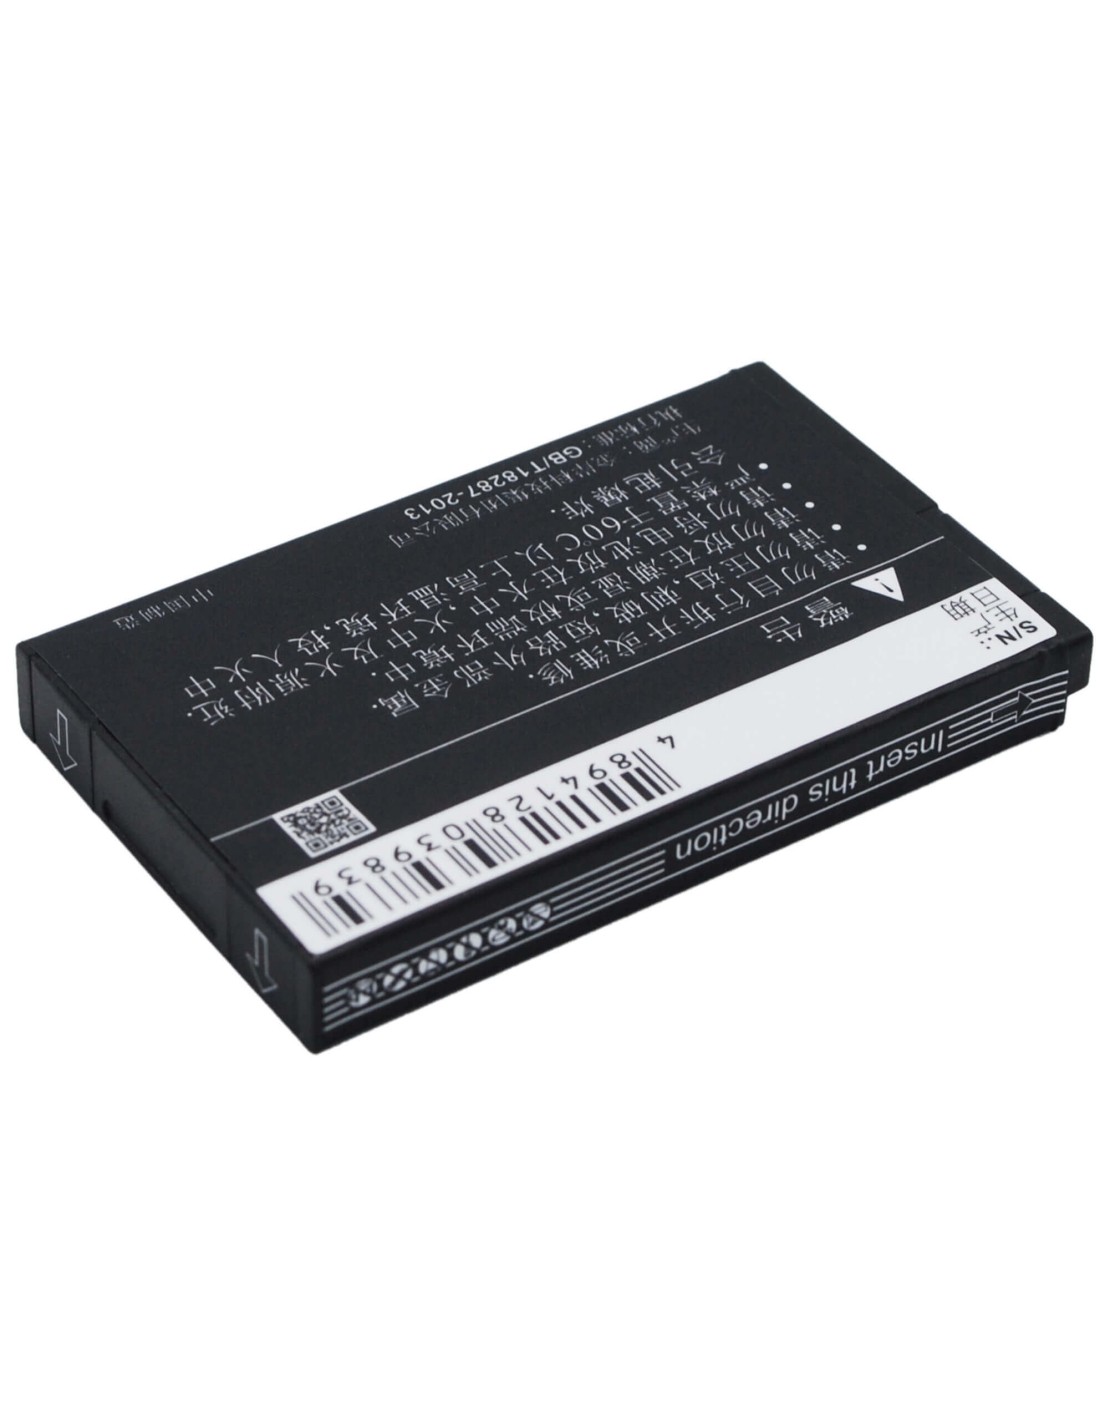 Battery for Huawei C2600, C2606, C2800 3.7V, 1100mAh - 4.07Wh